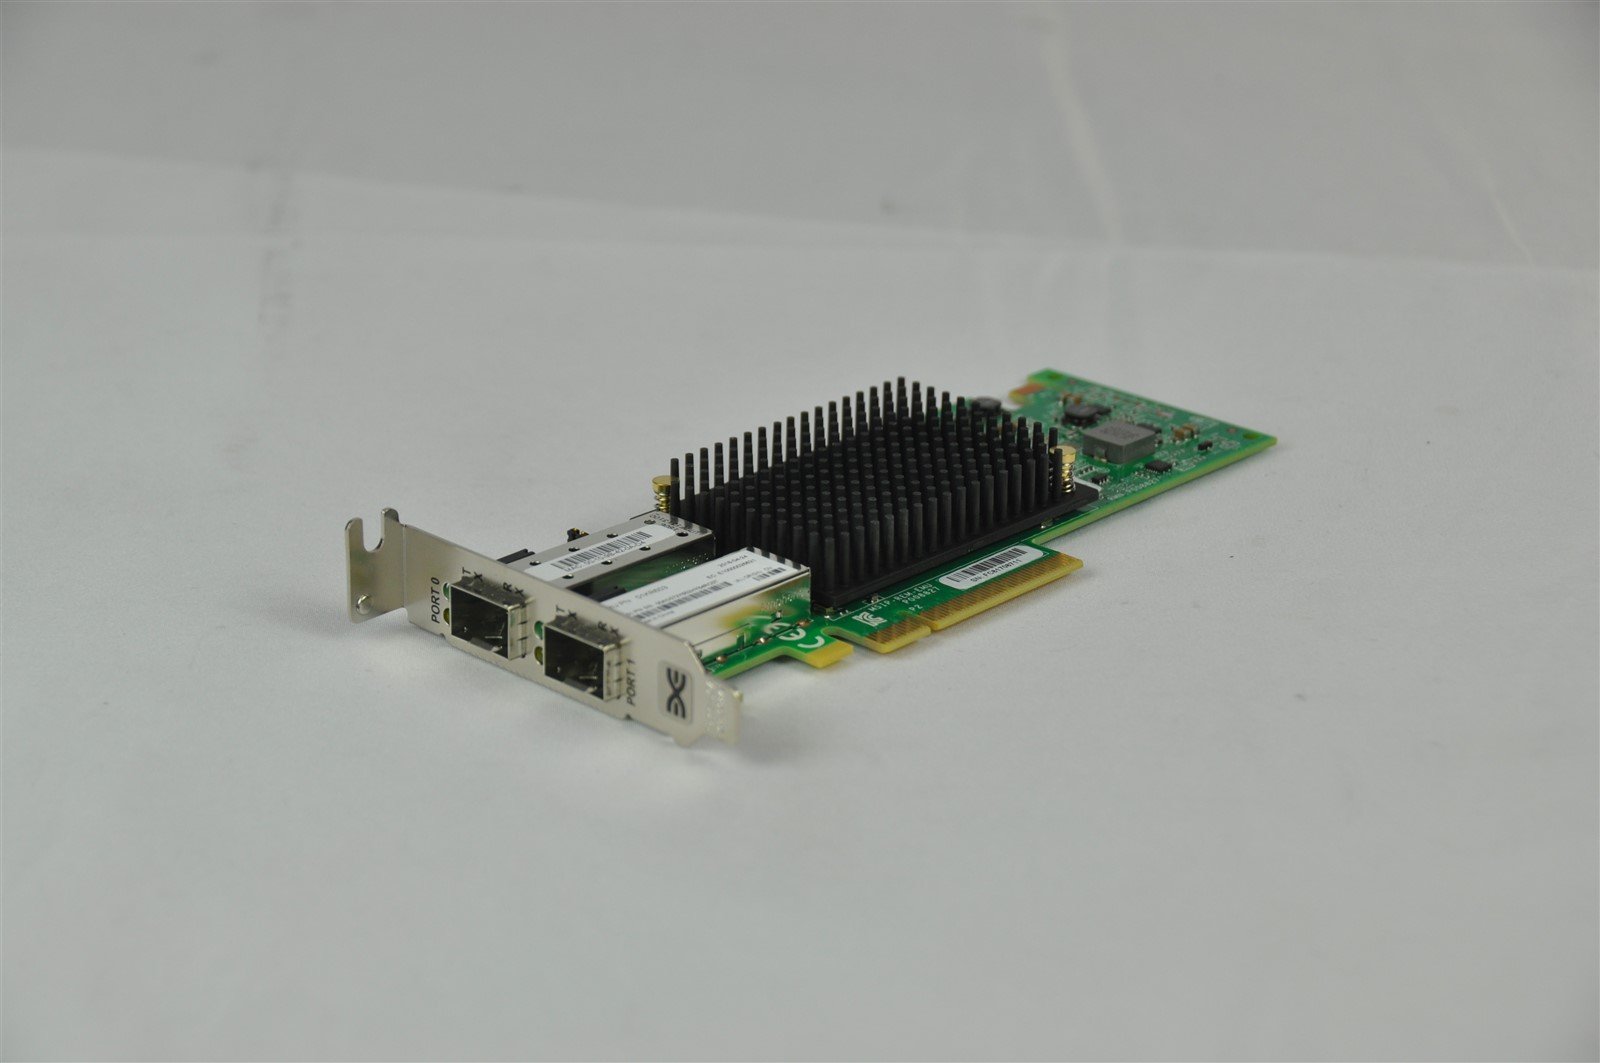 01KR603 LENOVO EMULEX QL41262 2-PORT 10GB SFP+ PCIE NETWORK ADAPTER LP